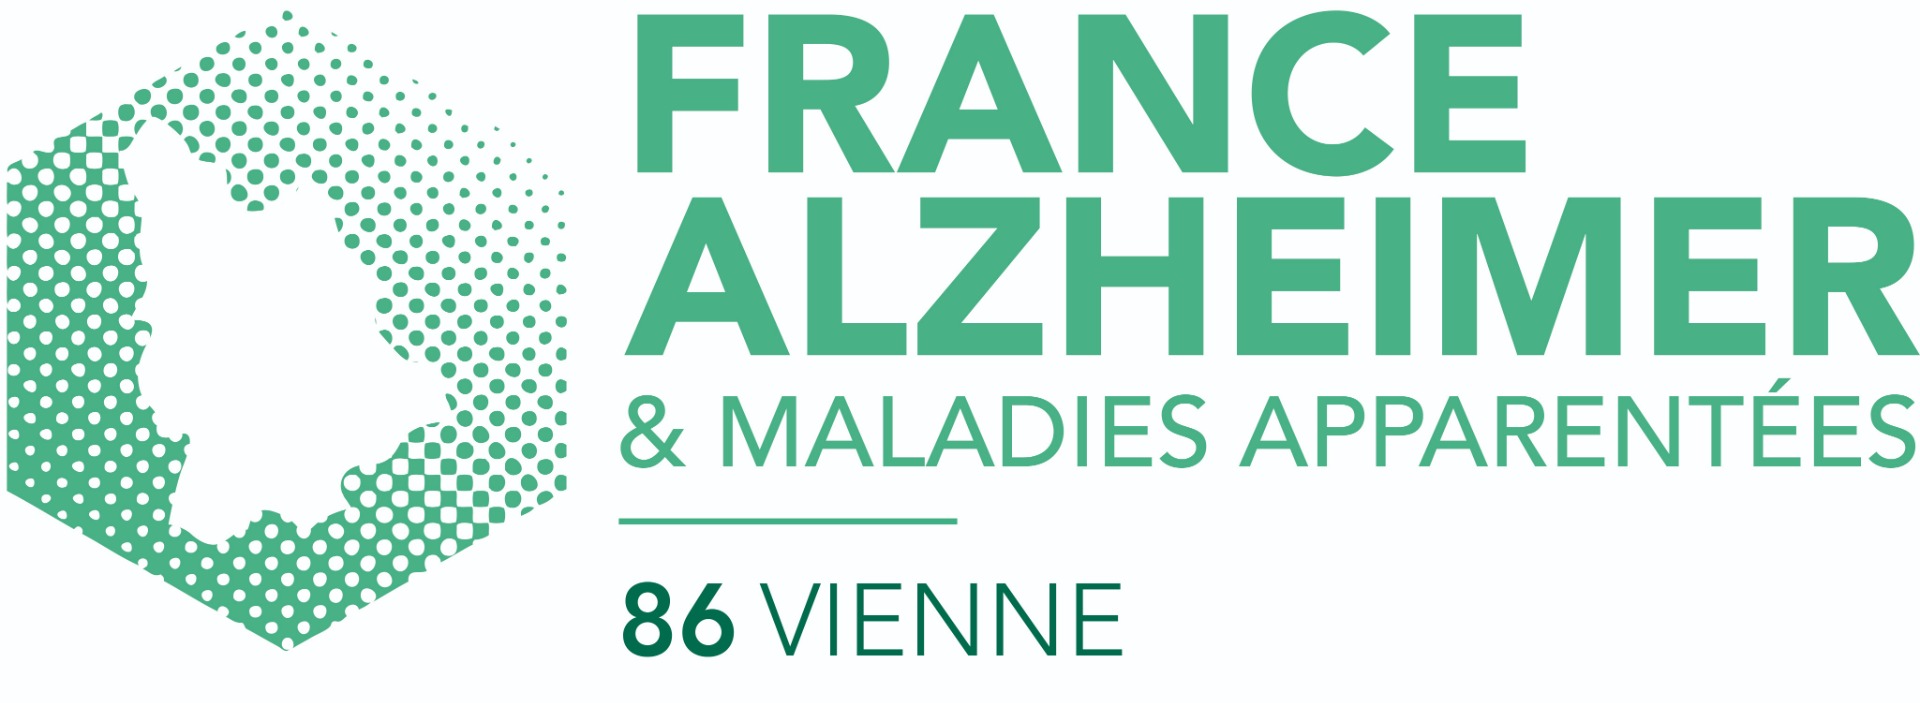 Photo de France Alzheimer Vienne à POITIERS